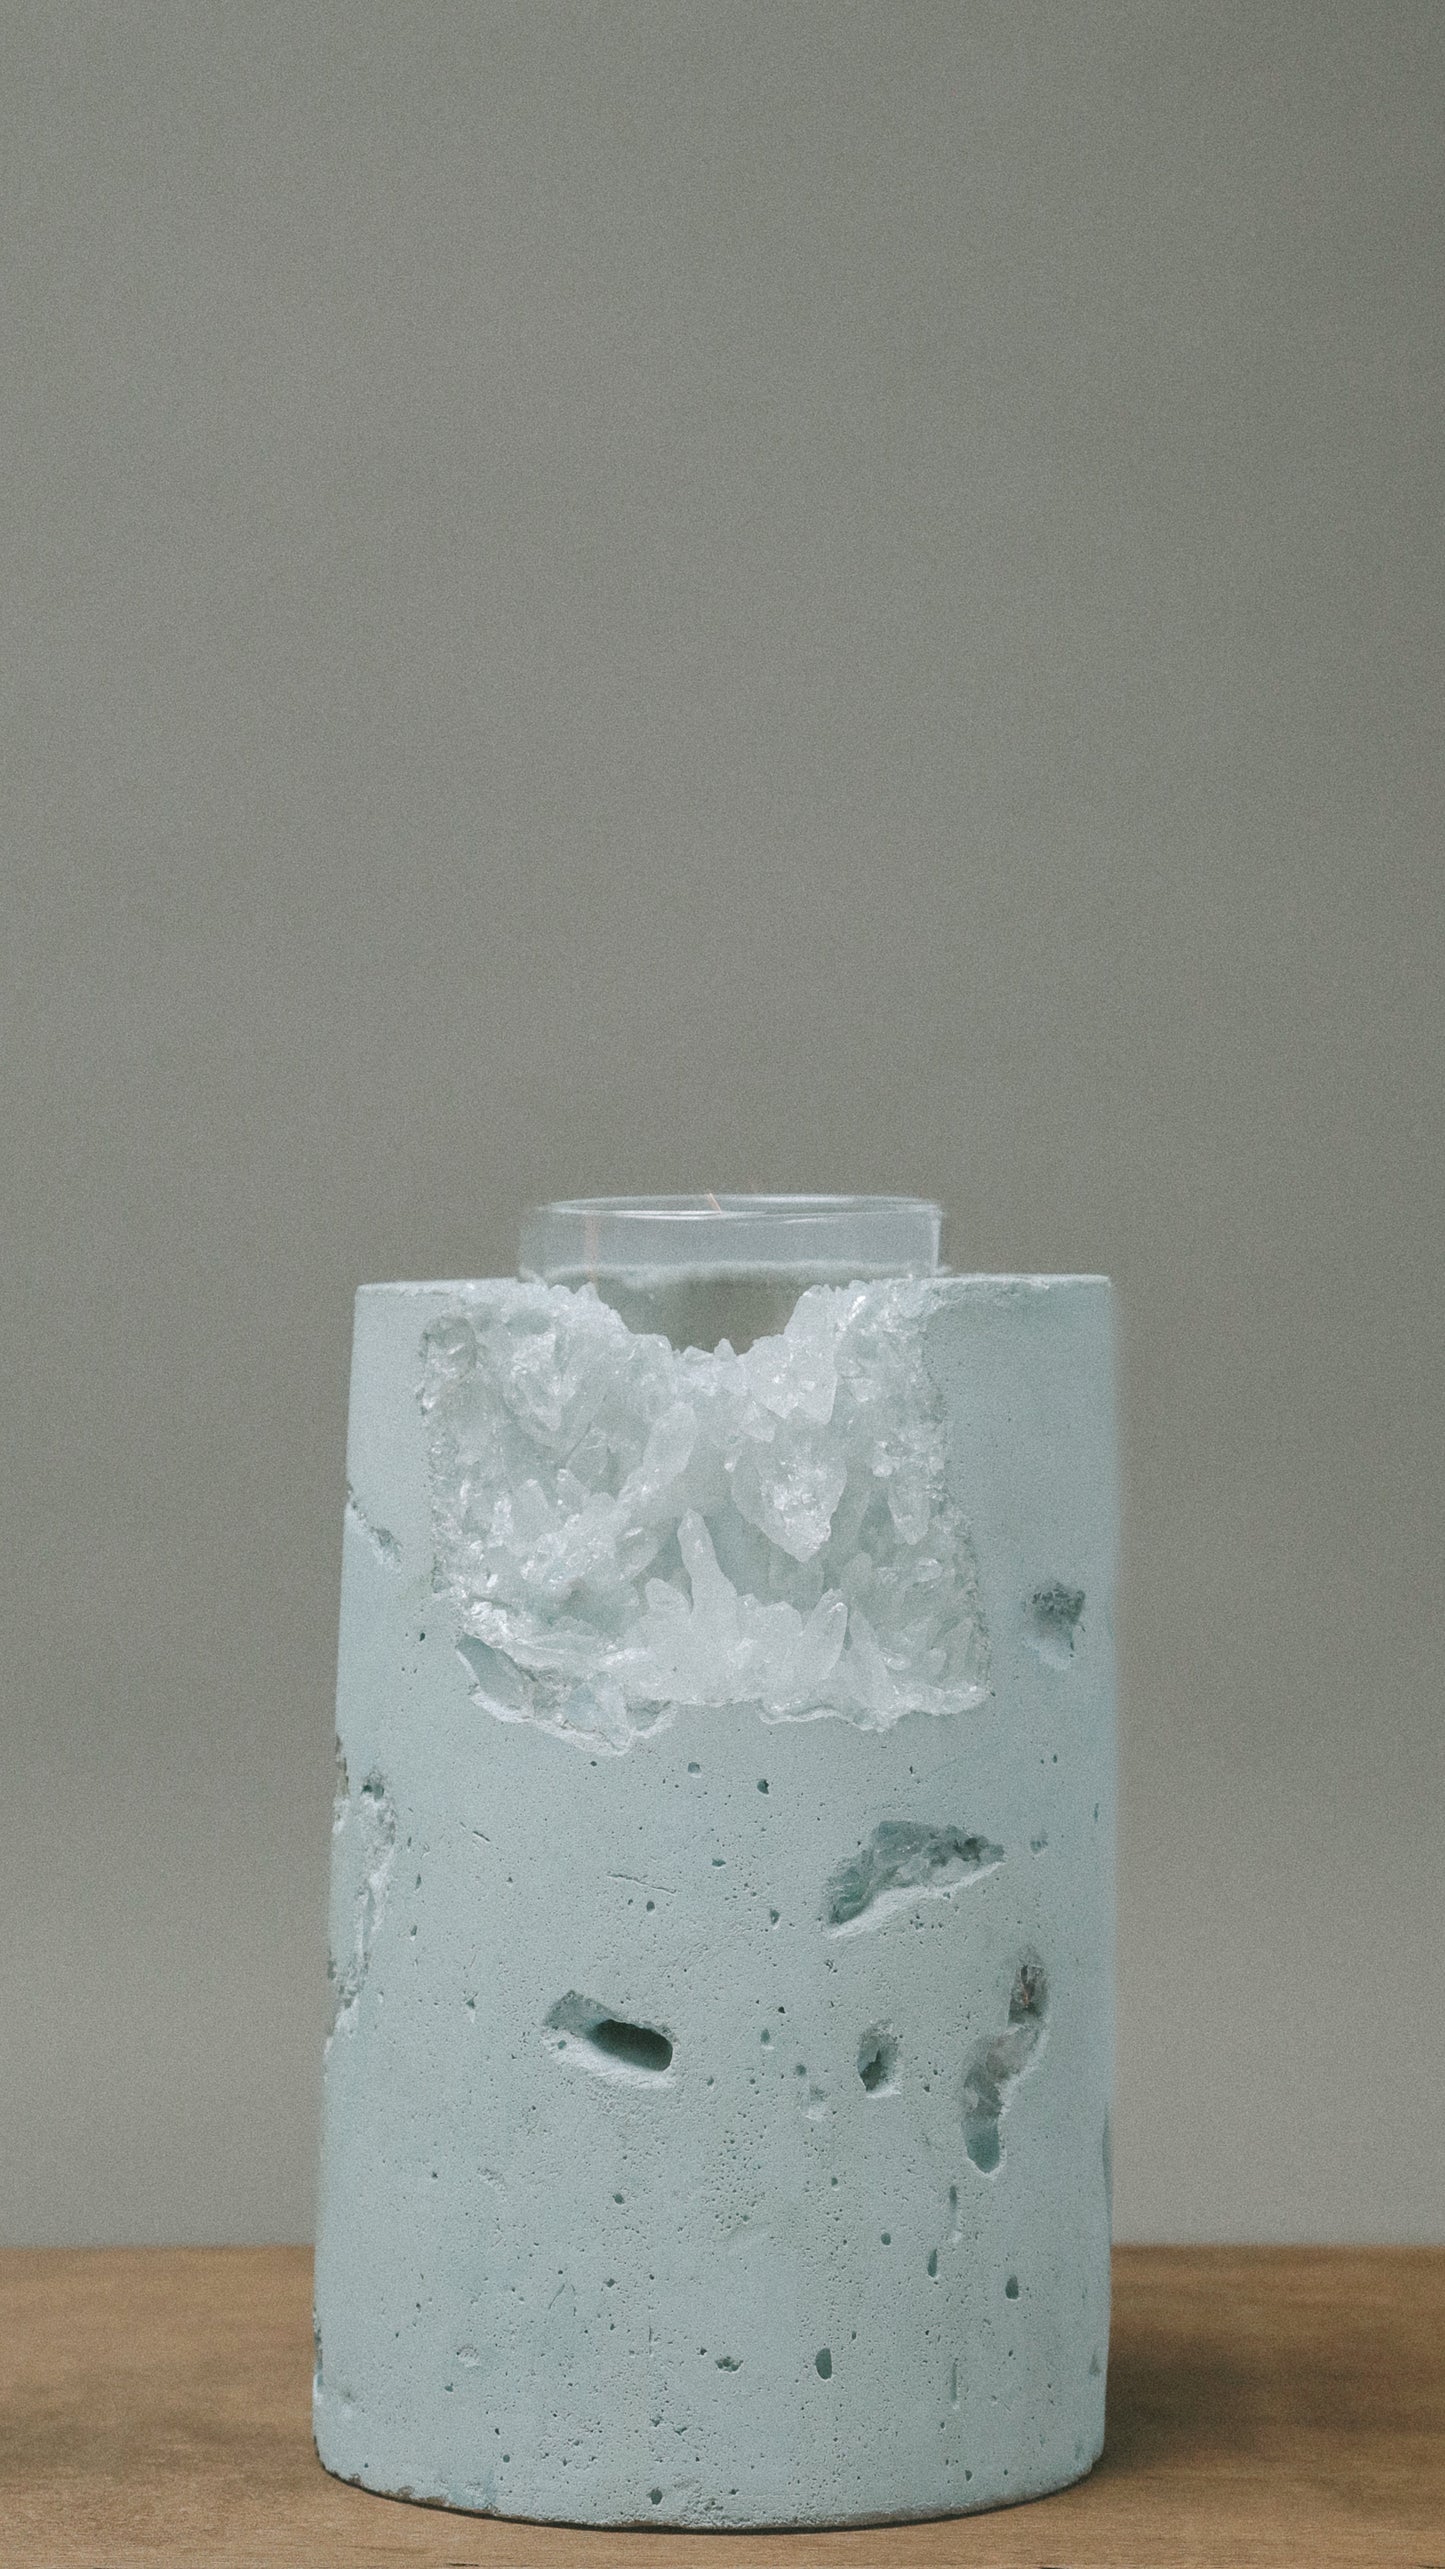 ARCTIC GLACIER made with Real Quartz Crystals